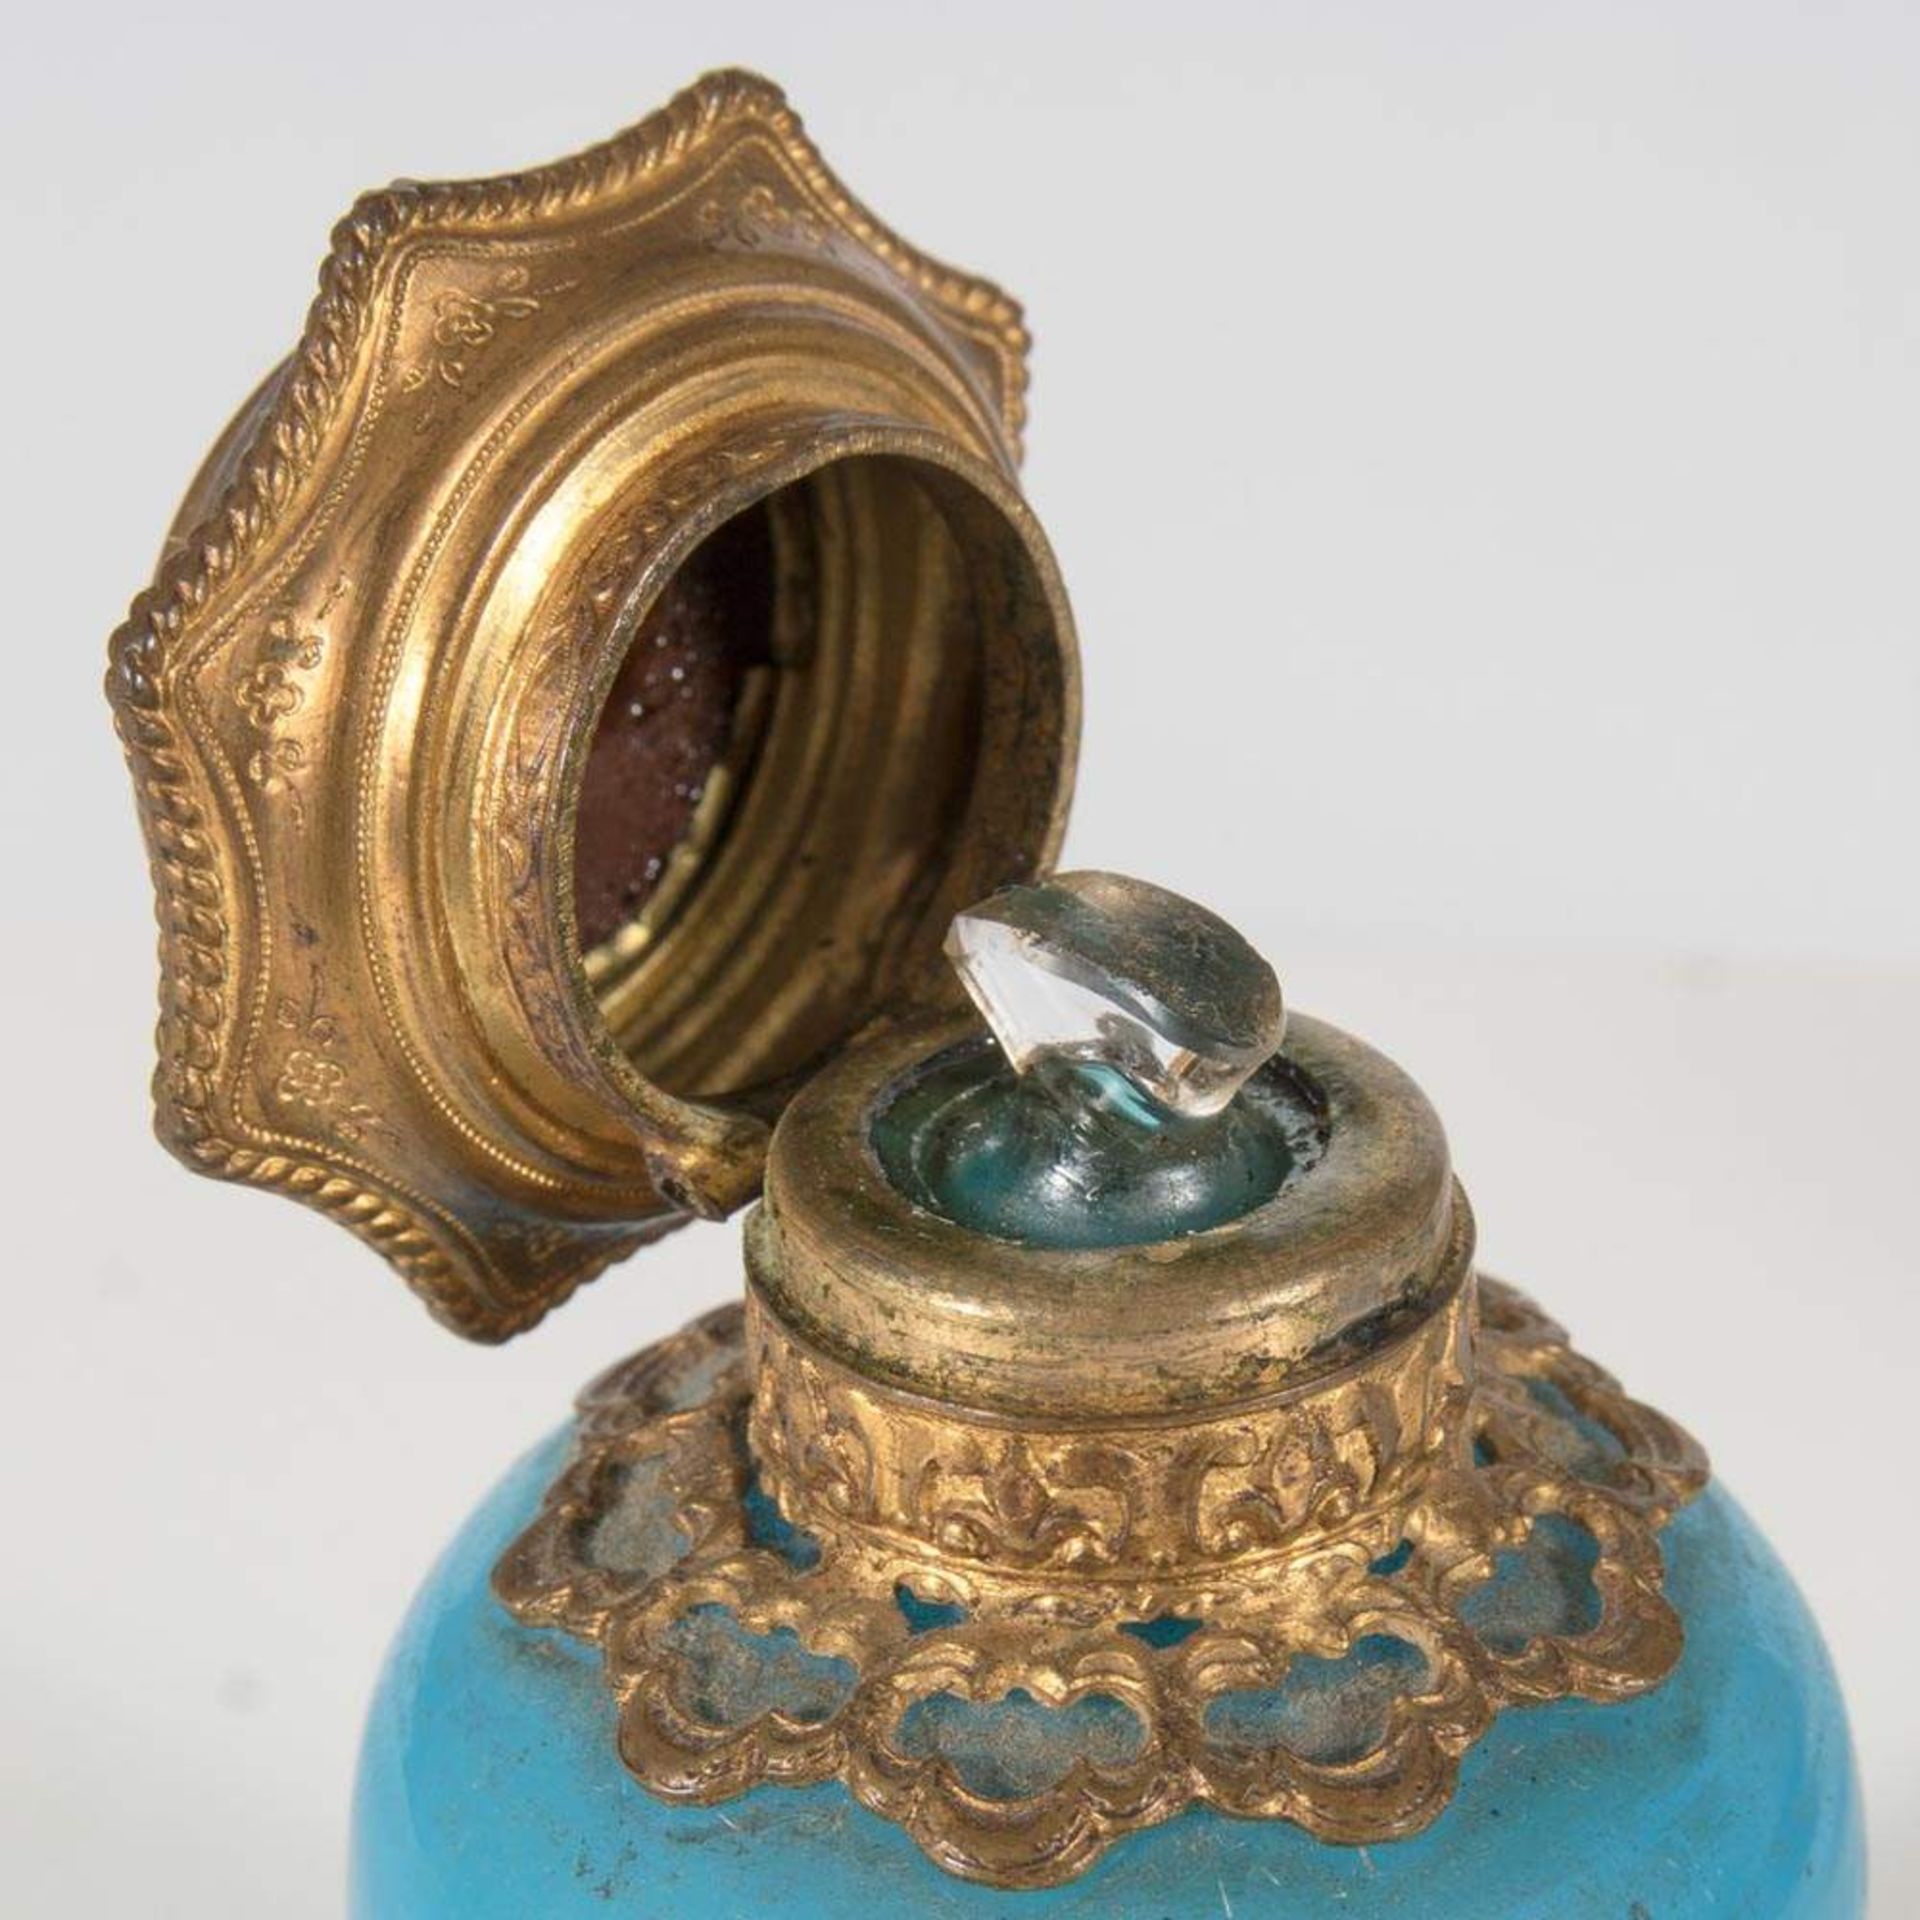 Paar Parfüm Flacons in original Deckelschatulle. Blaue Glasflakons mit Messingblechbeschlägen, - Image 3 of 12